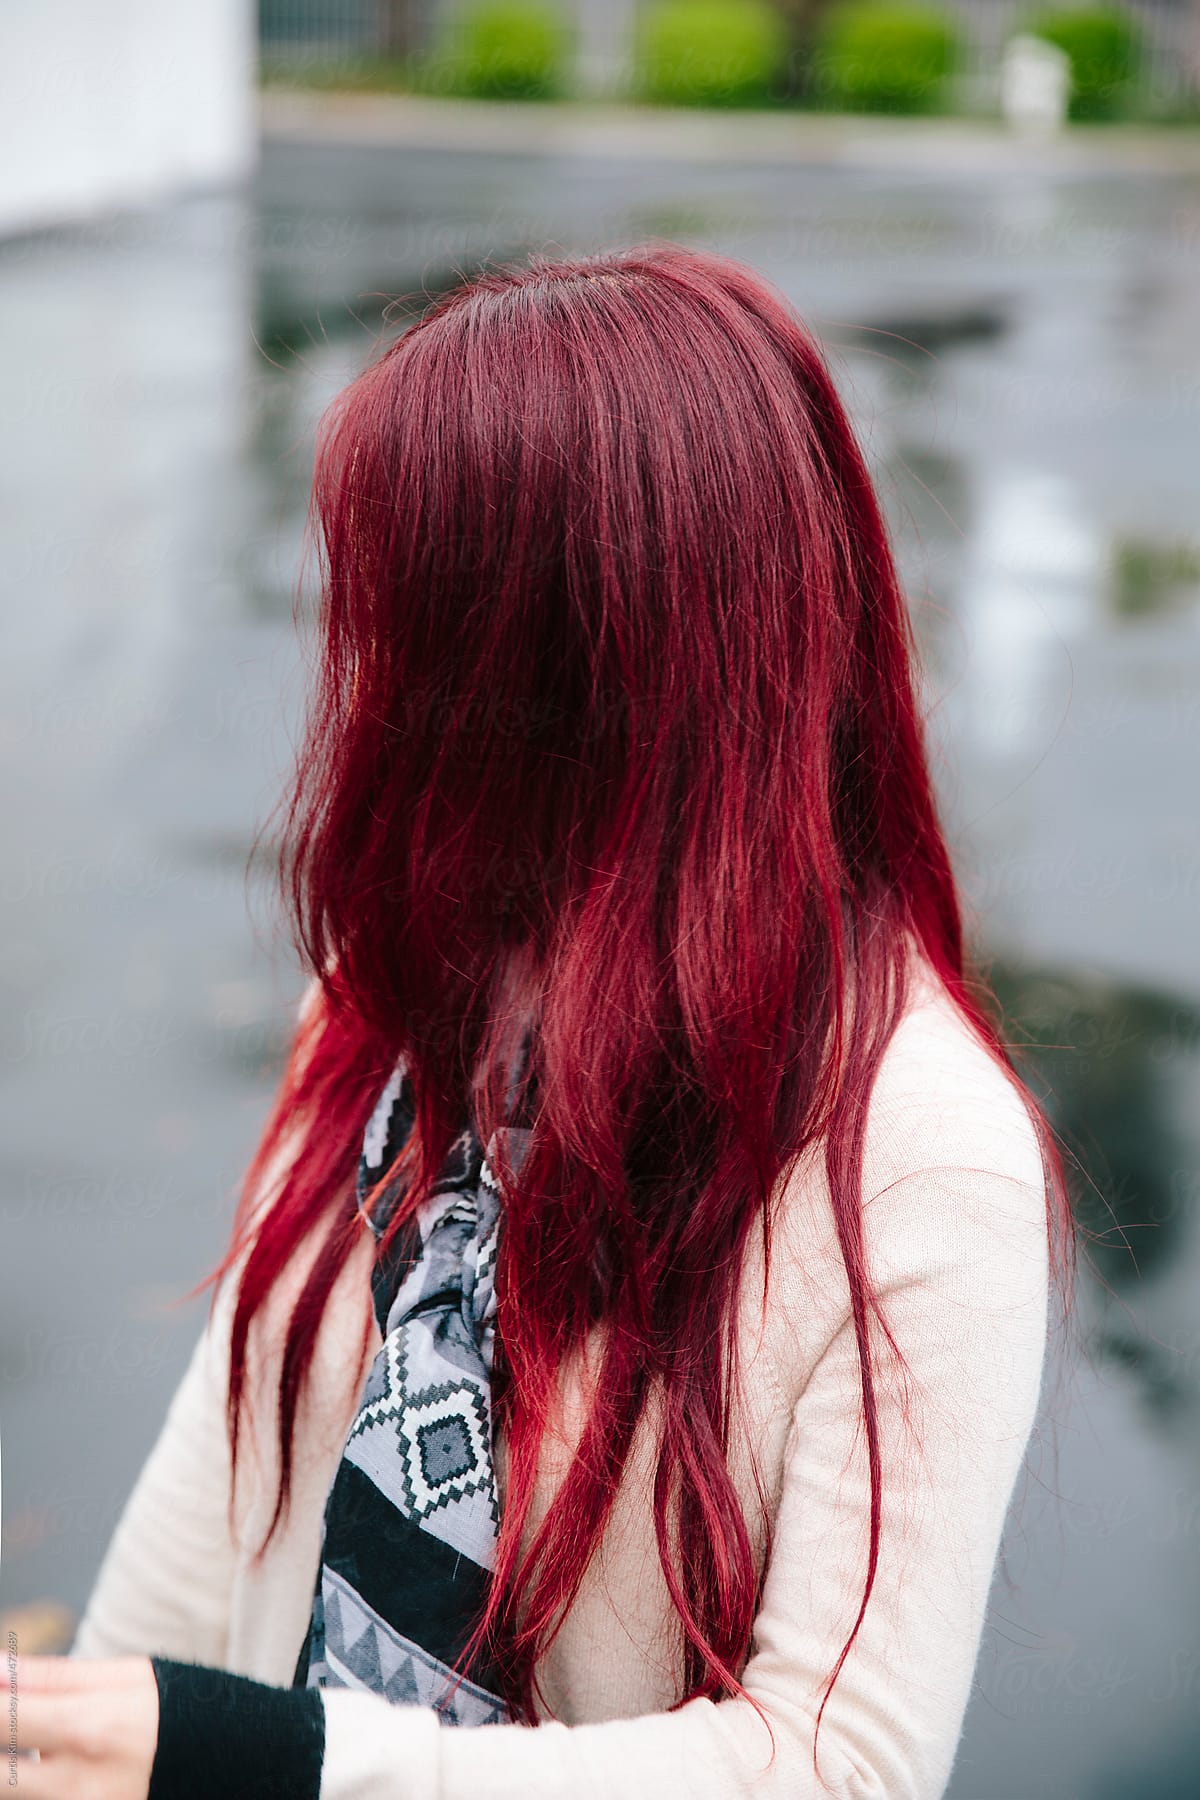 Asian Female With Striking Red Hair Del Colaborador De Stocksy Curtis Kim Stocksy